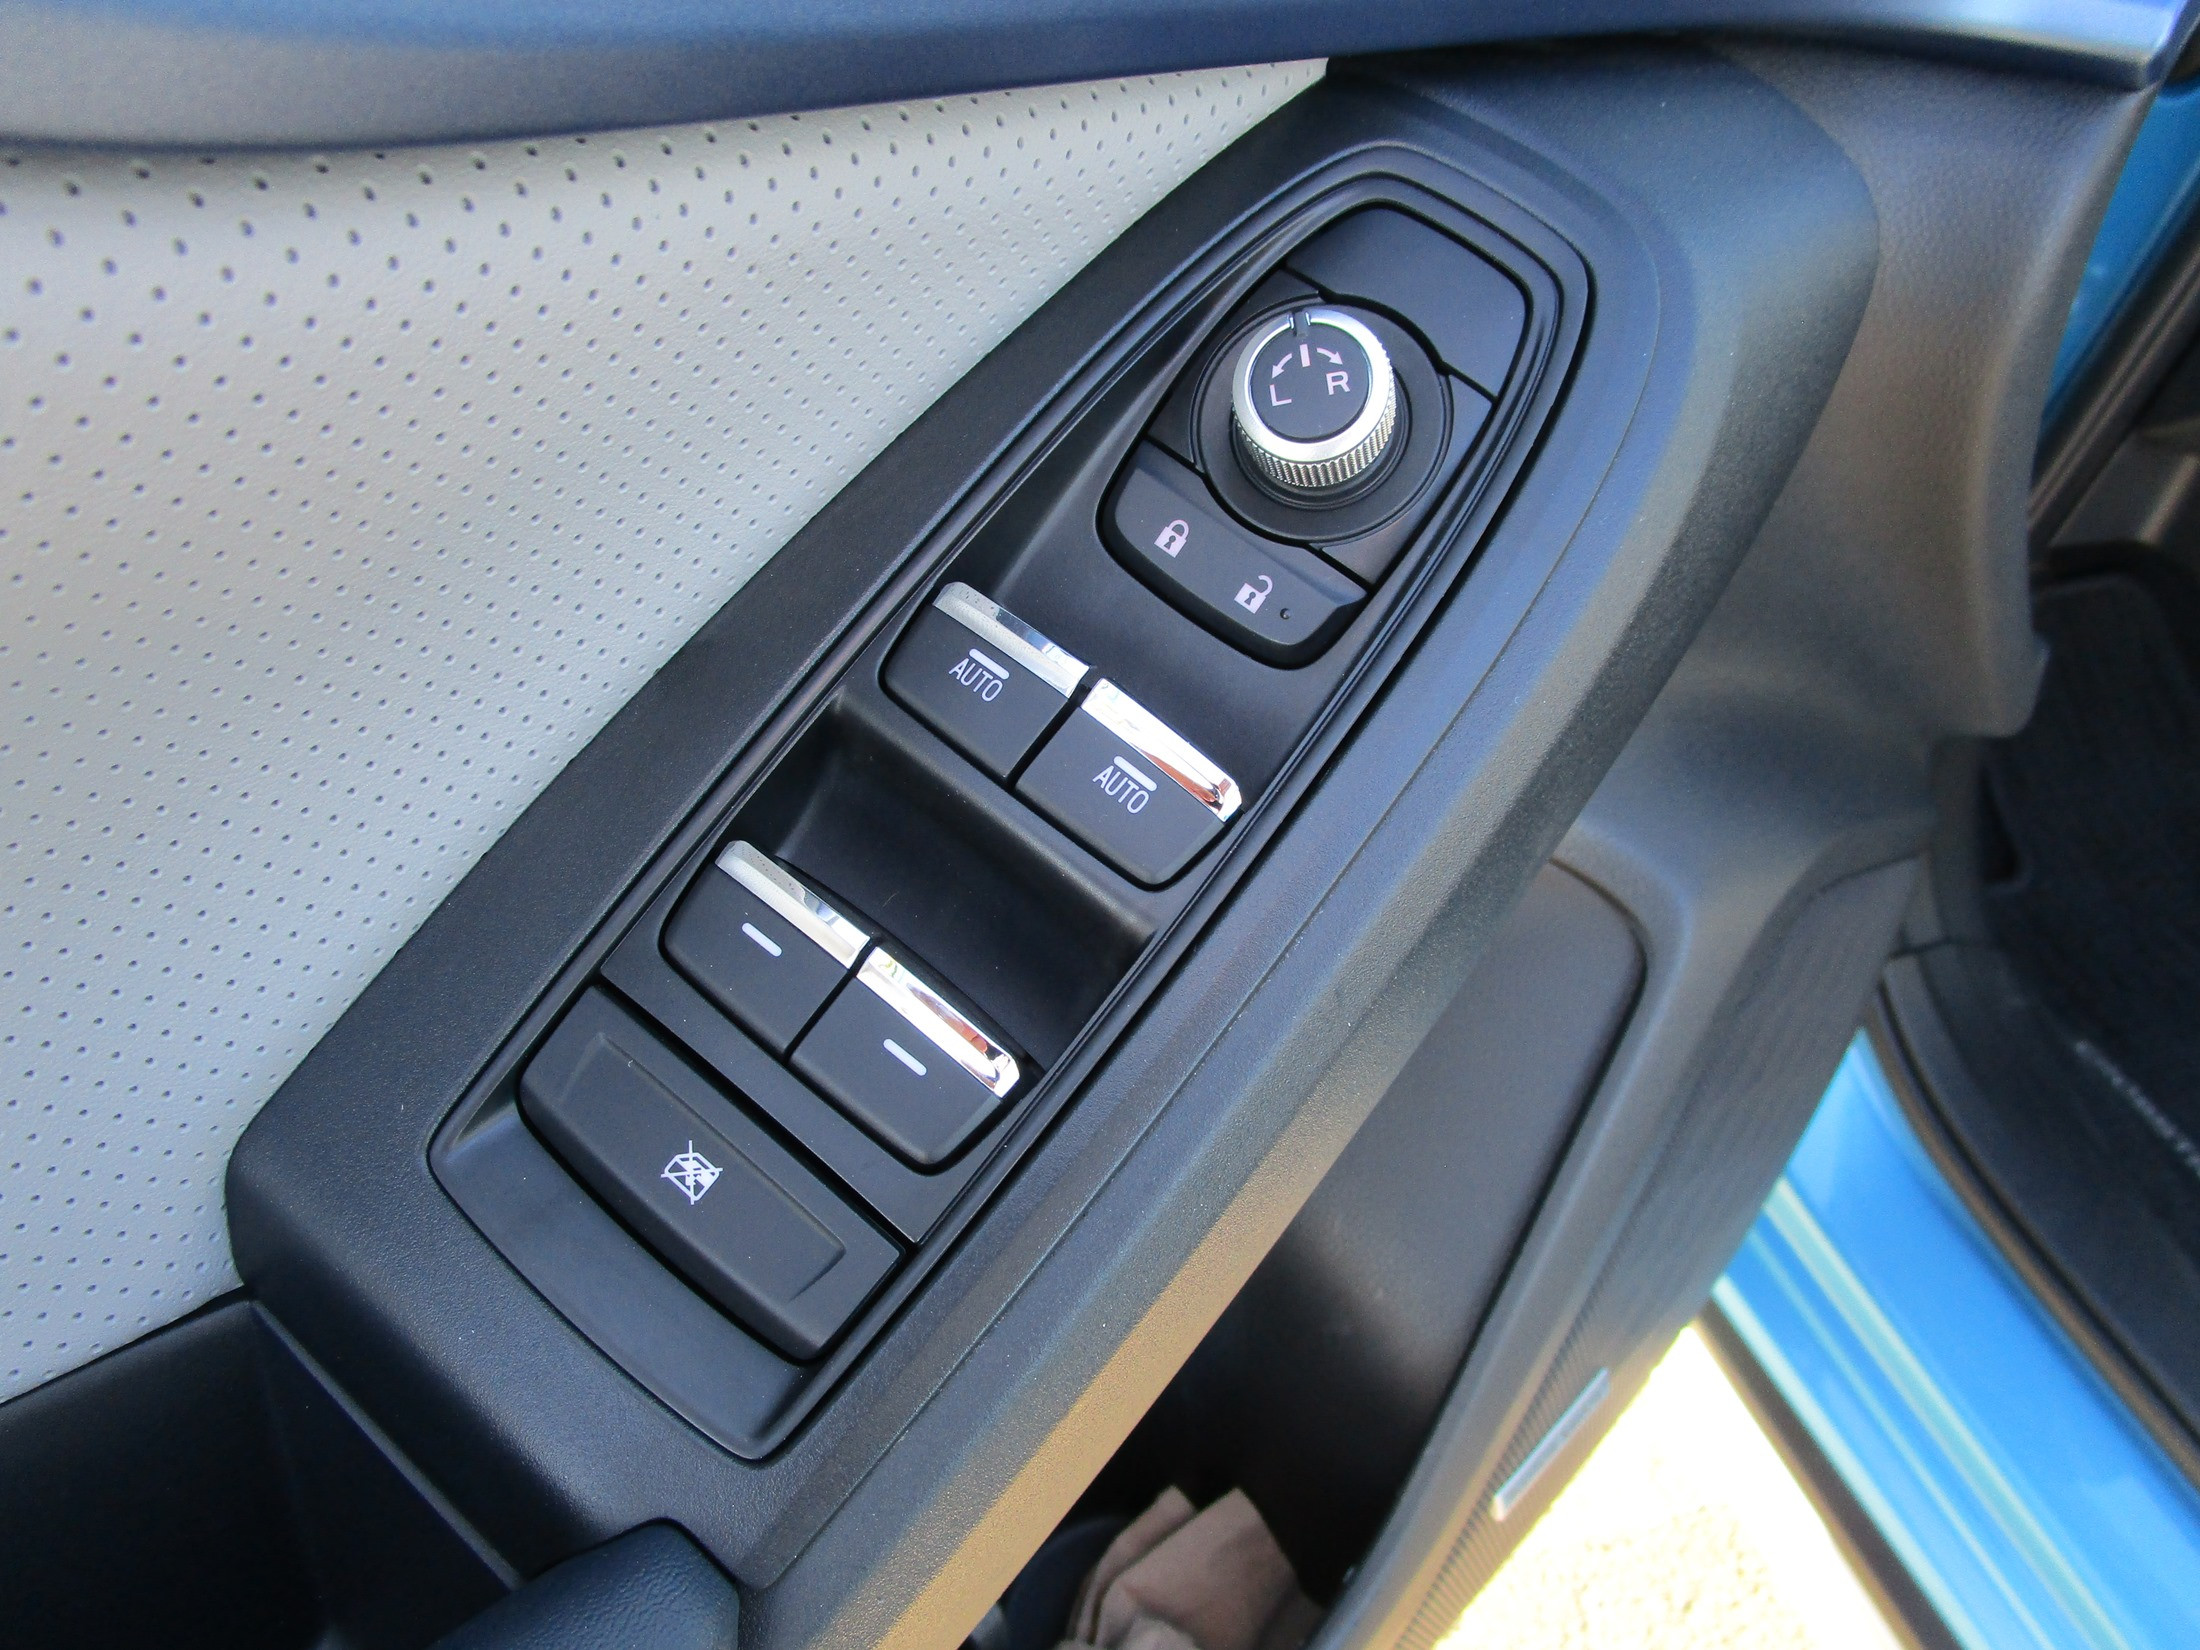 2019 Subaru Crosstrek Plug-in Hybrid Review by Ben Lewis » CAR SHOPPING ...